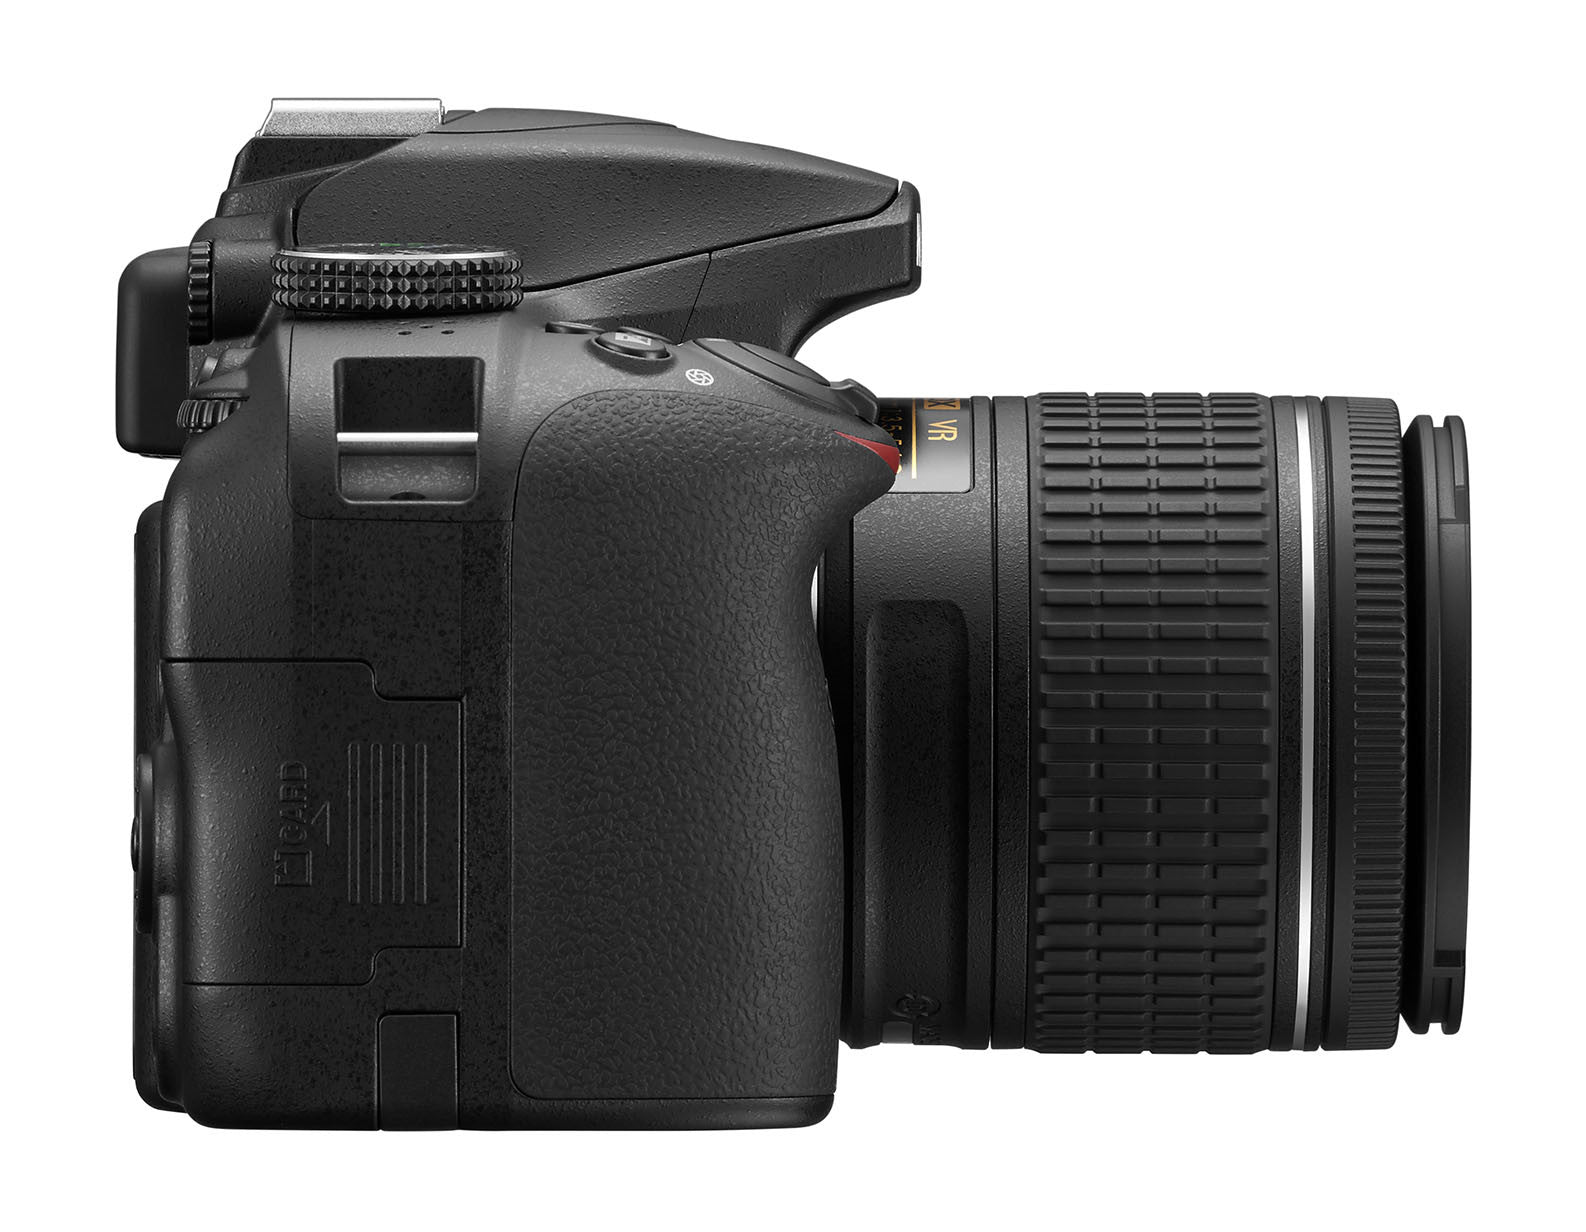 Nikon D3400 Digital SLR Camera 2 Lens Kit (18-55mm 70-300mm), camera dslr cameras, Nikon - Pictureline  - 7